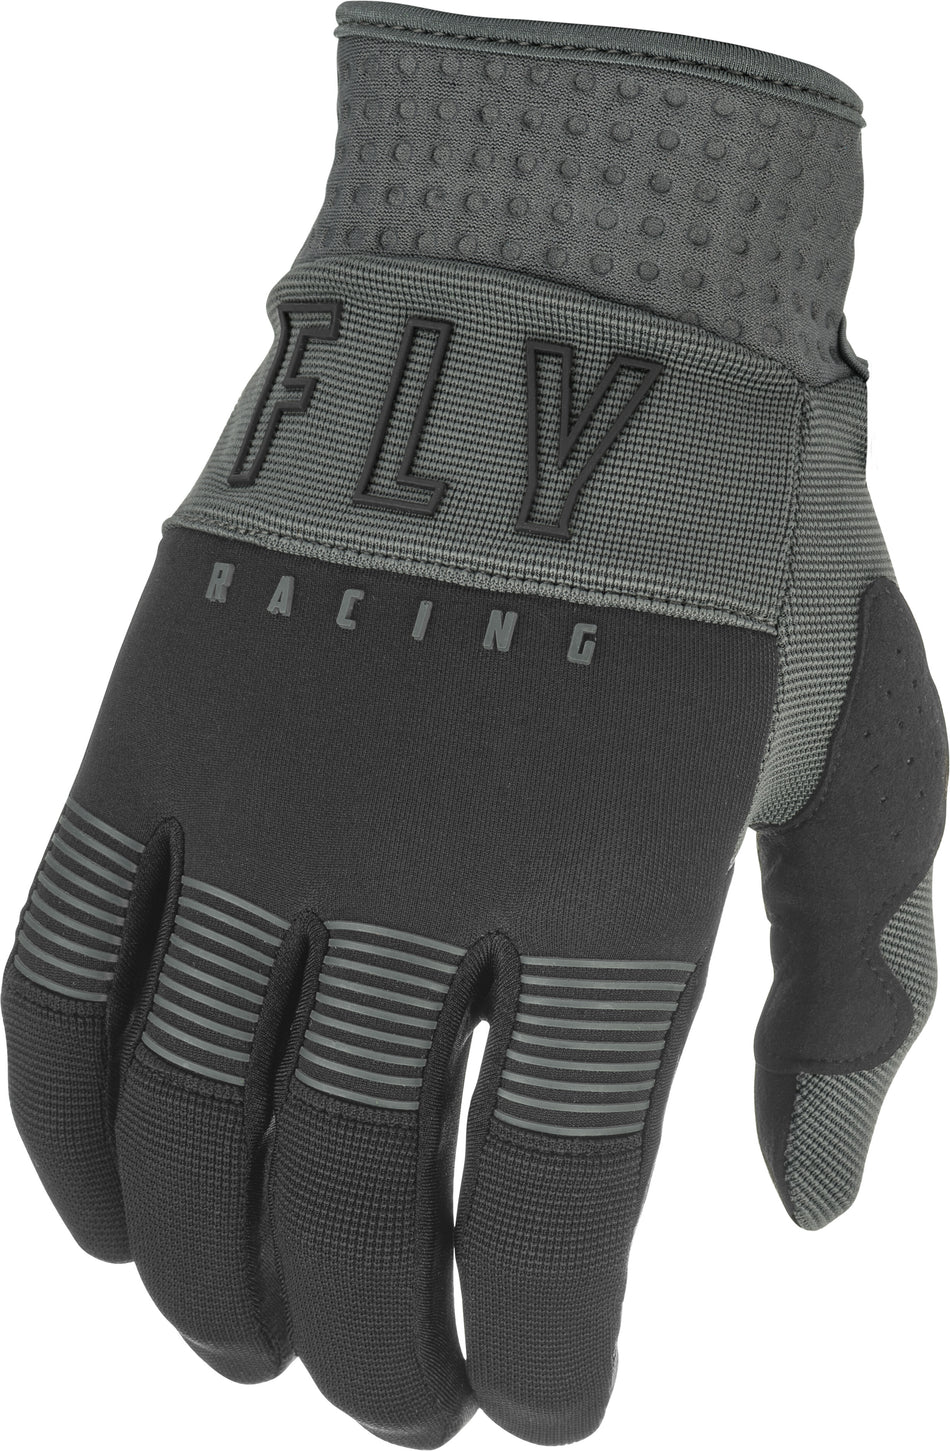 FLY RACING Youth F-16 Gloves Black/Grey Sz 06 374-91006